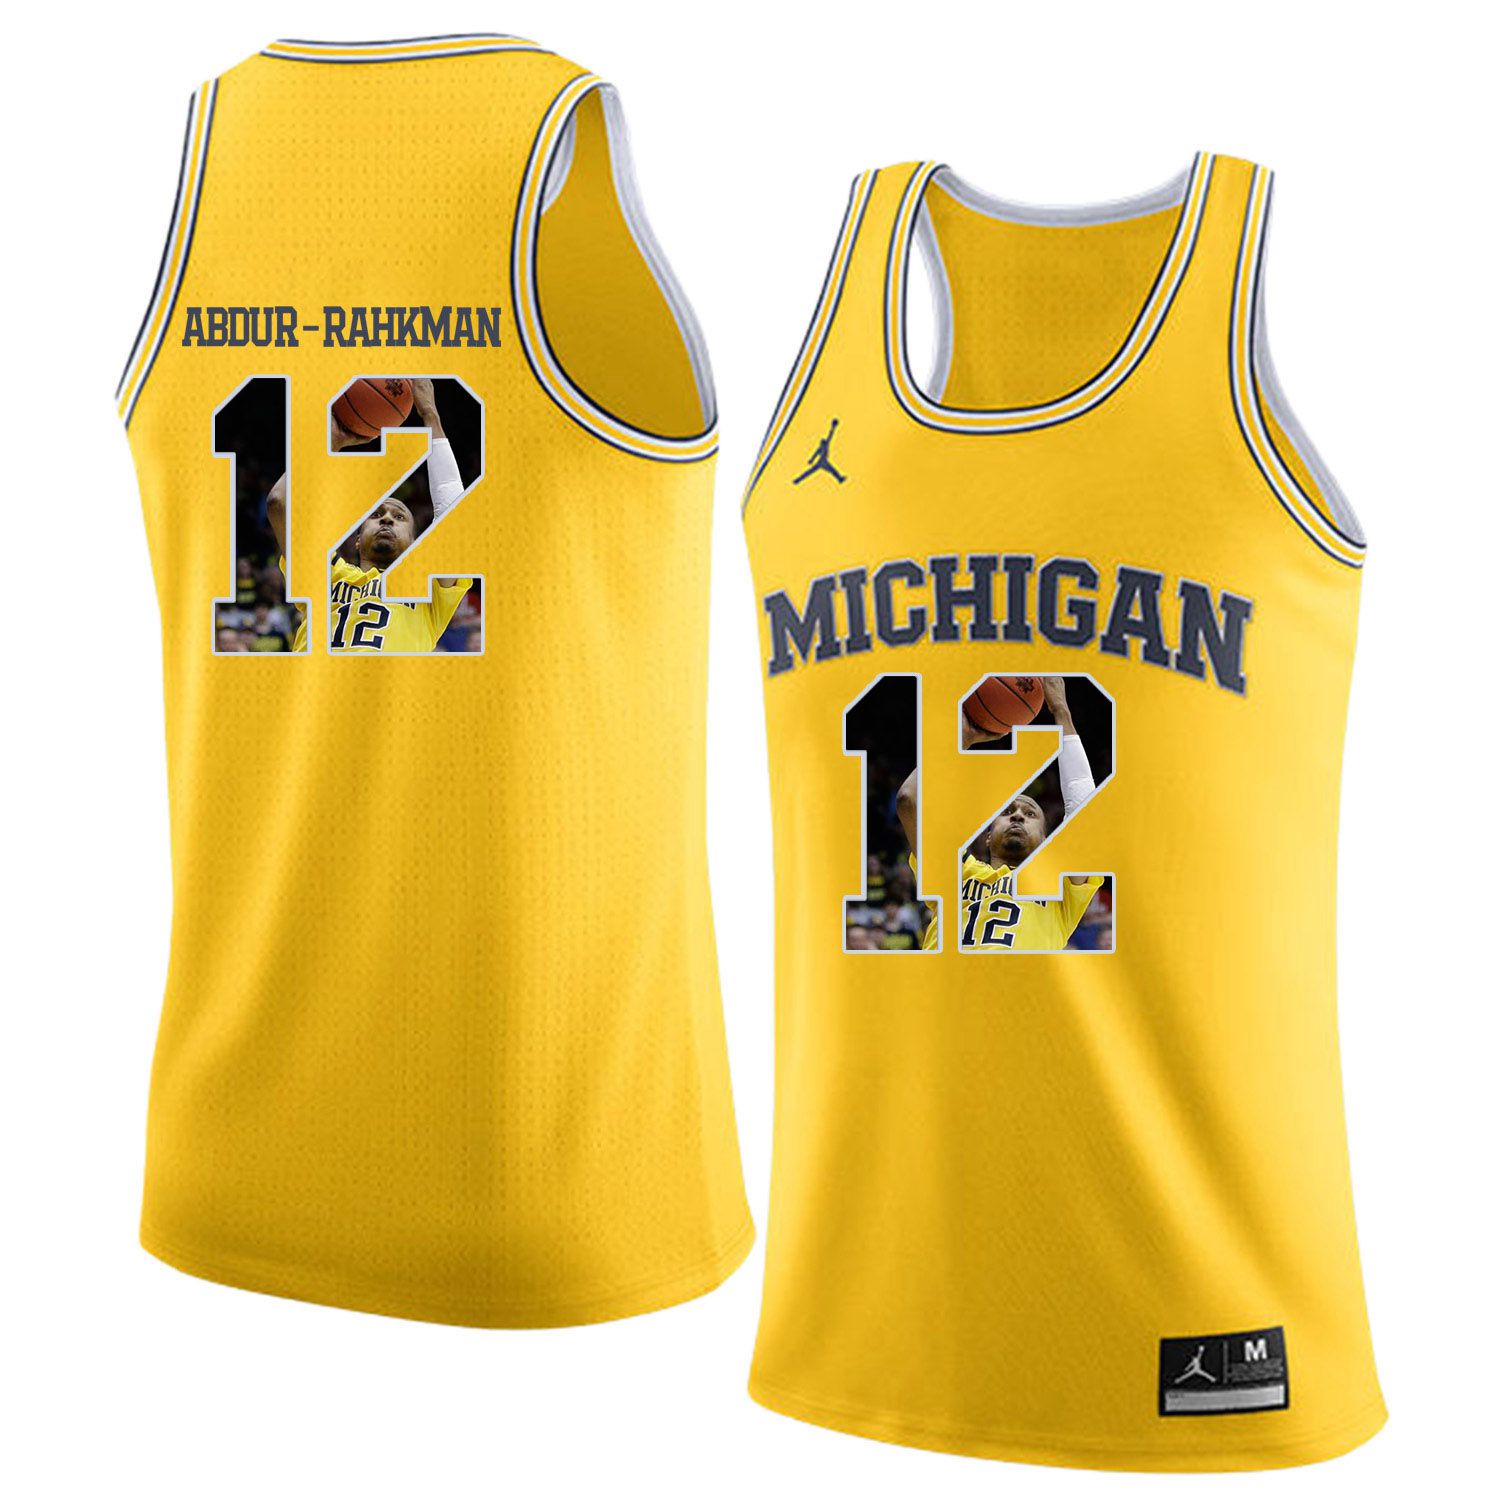 Men Jordan University of Michigan Basketball Yellow 12 Abdur-Rahkman Fashion Edition Customized NCAA Jerseys